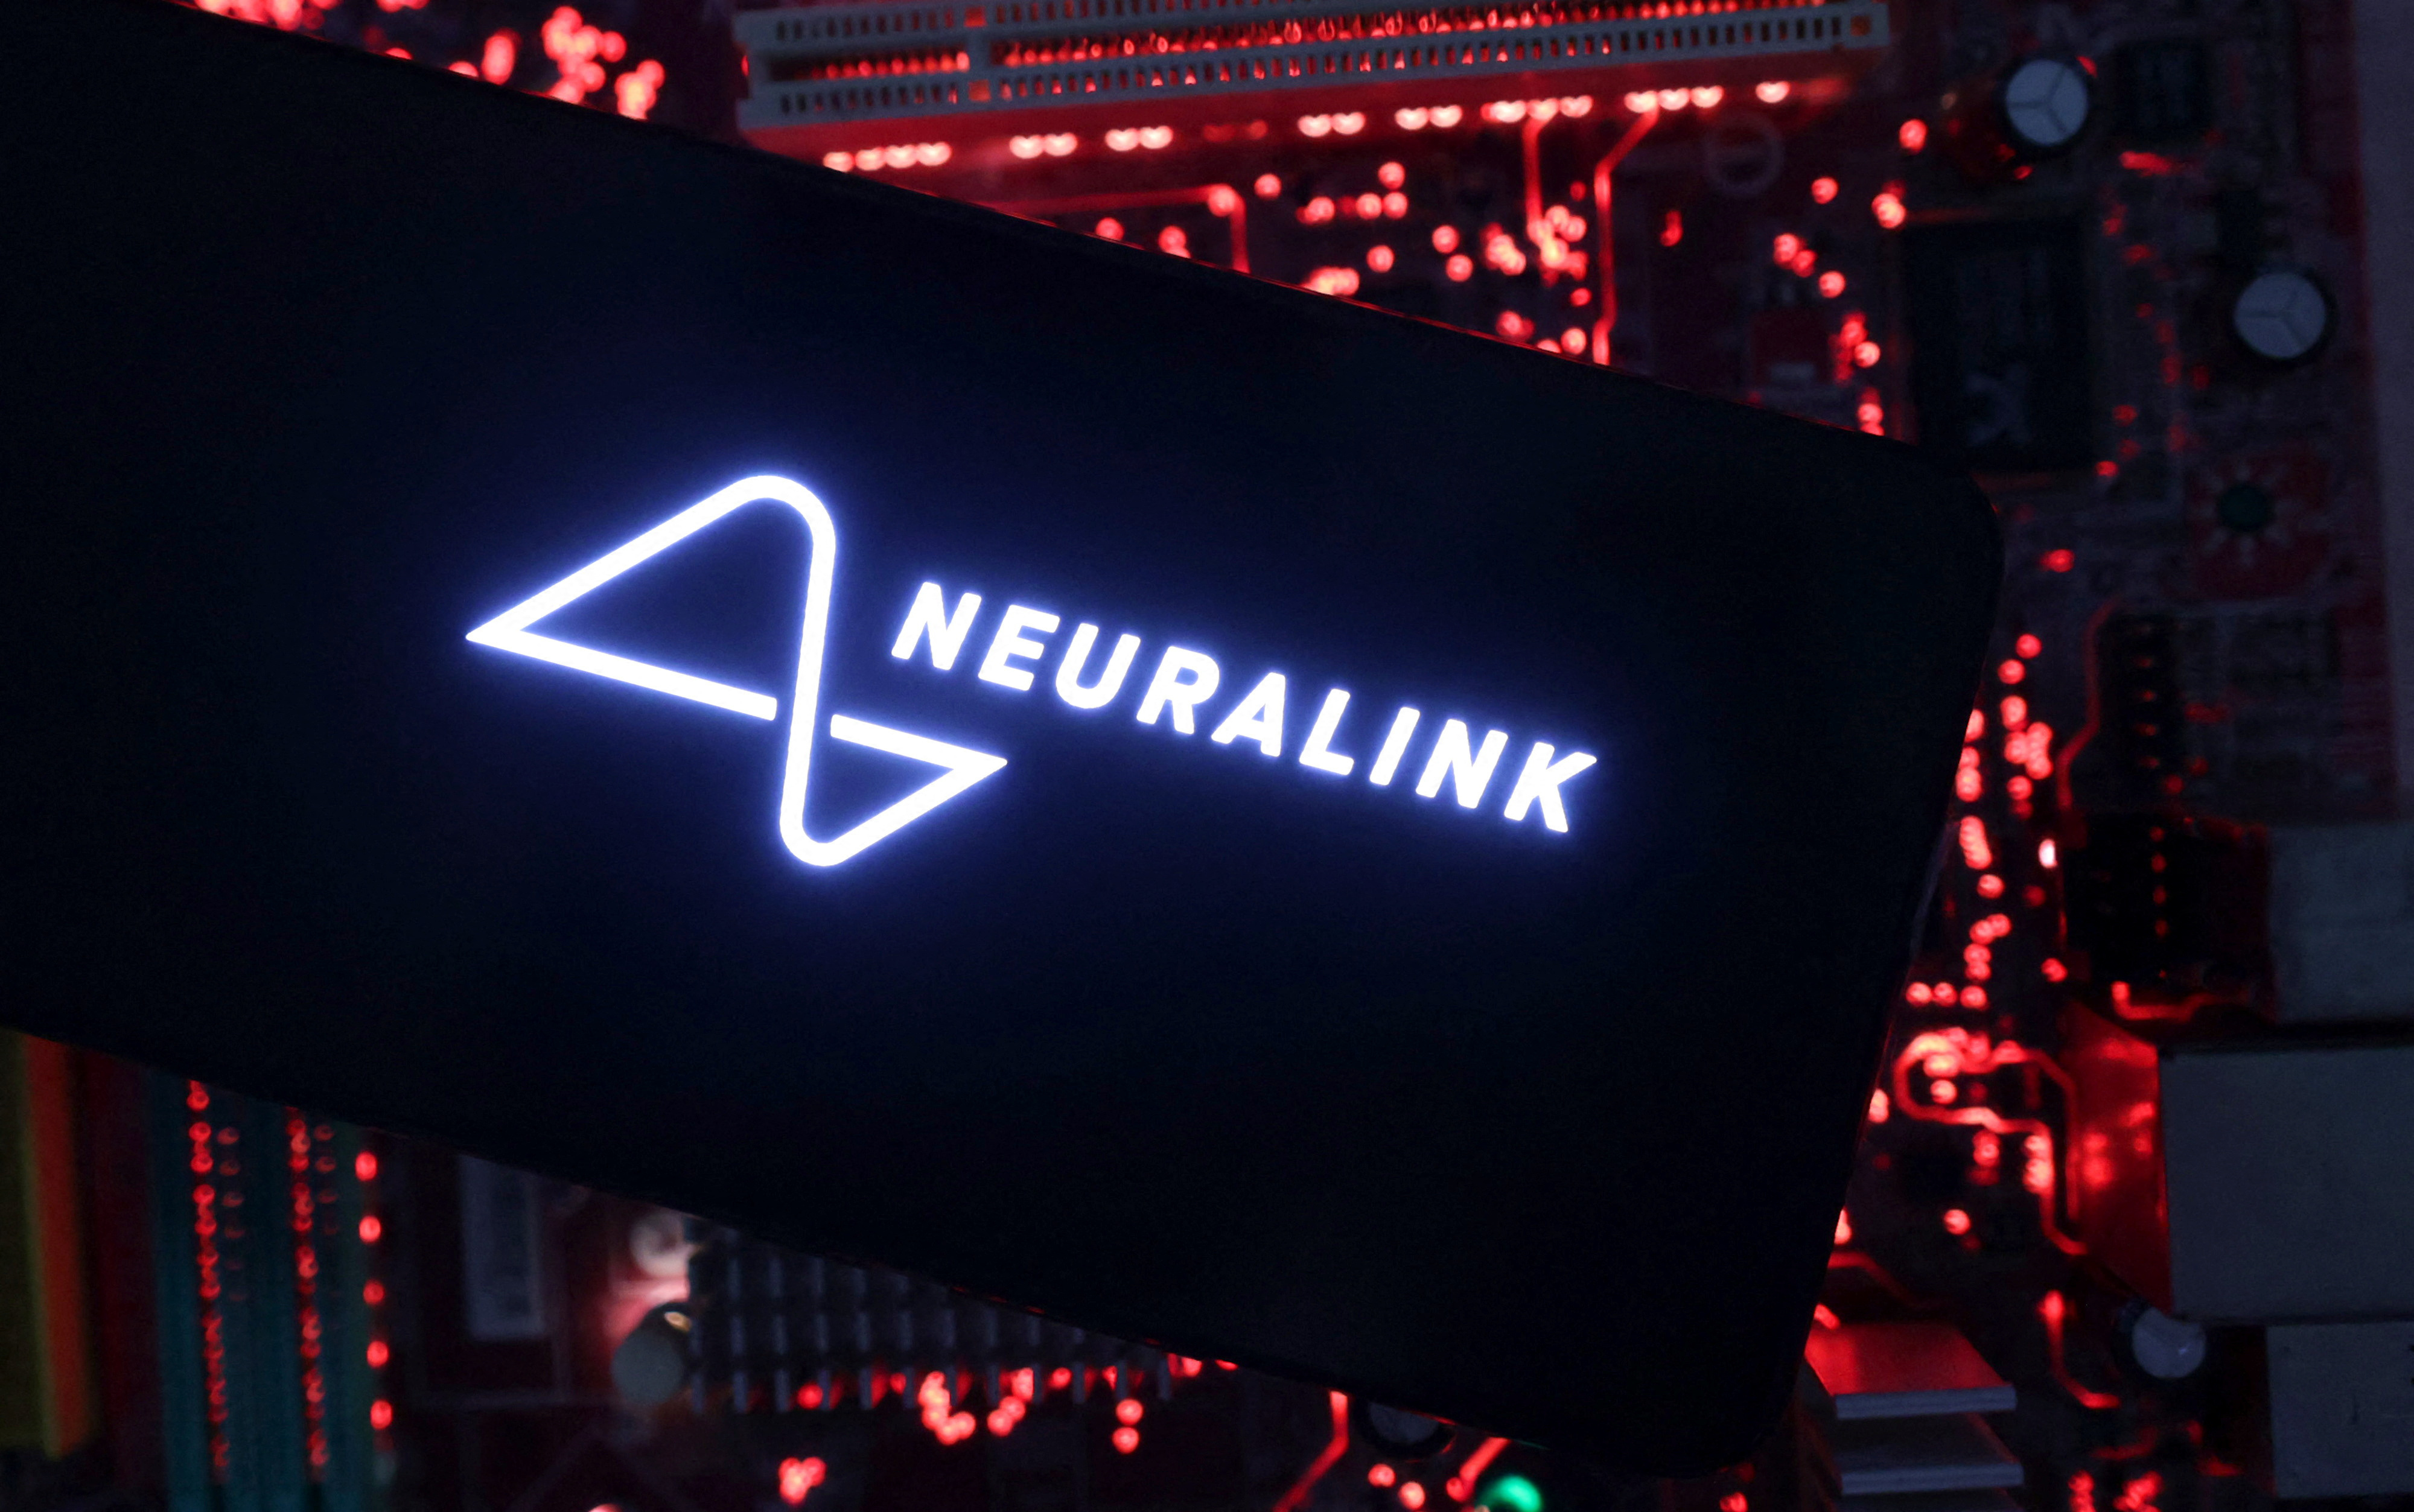 Illustration shows Neuralink logo